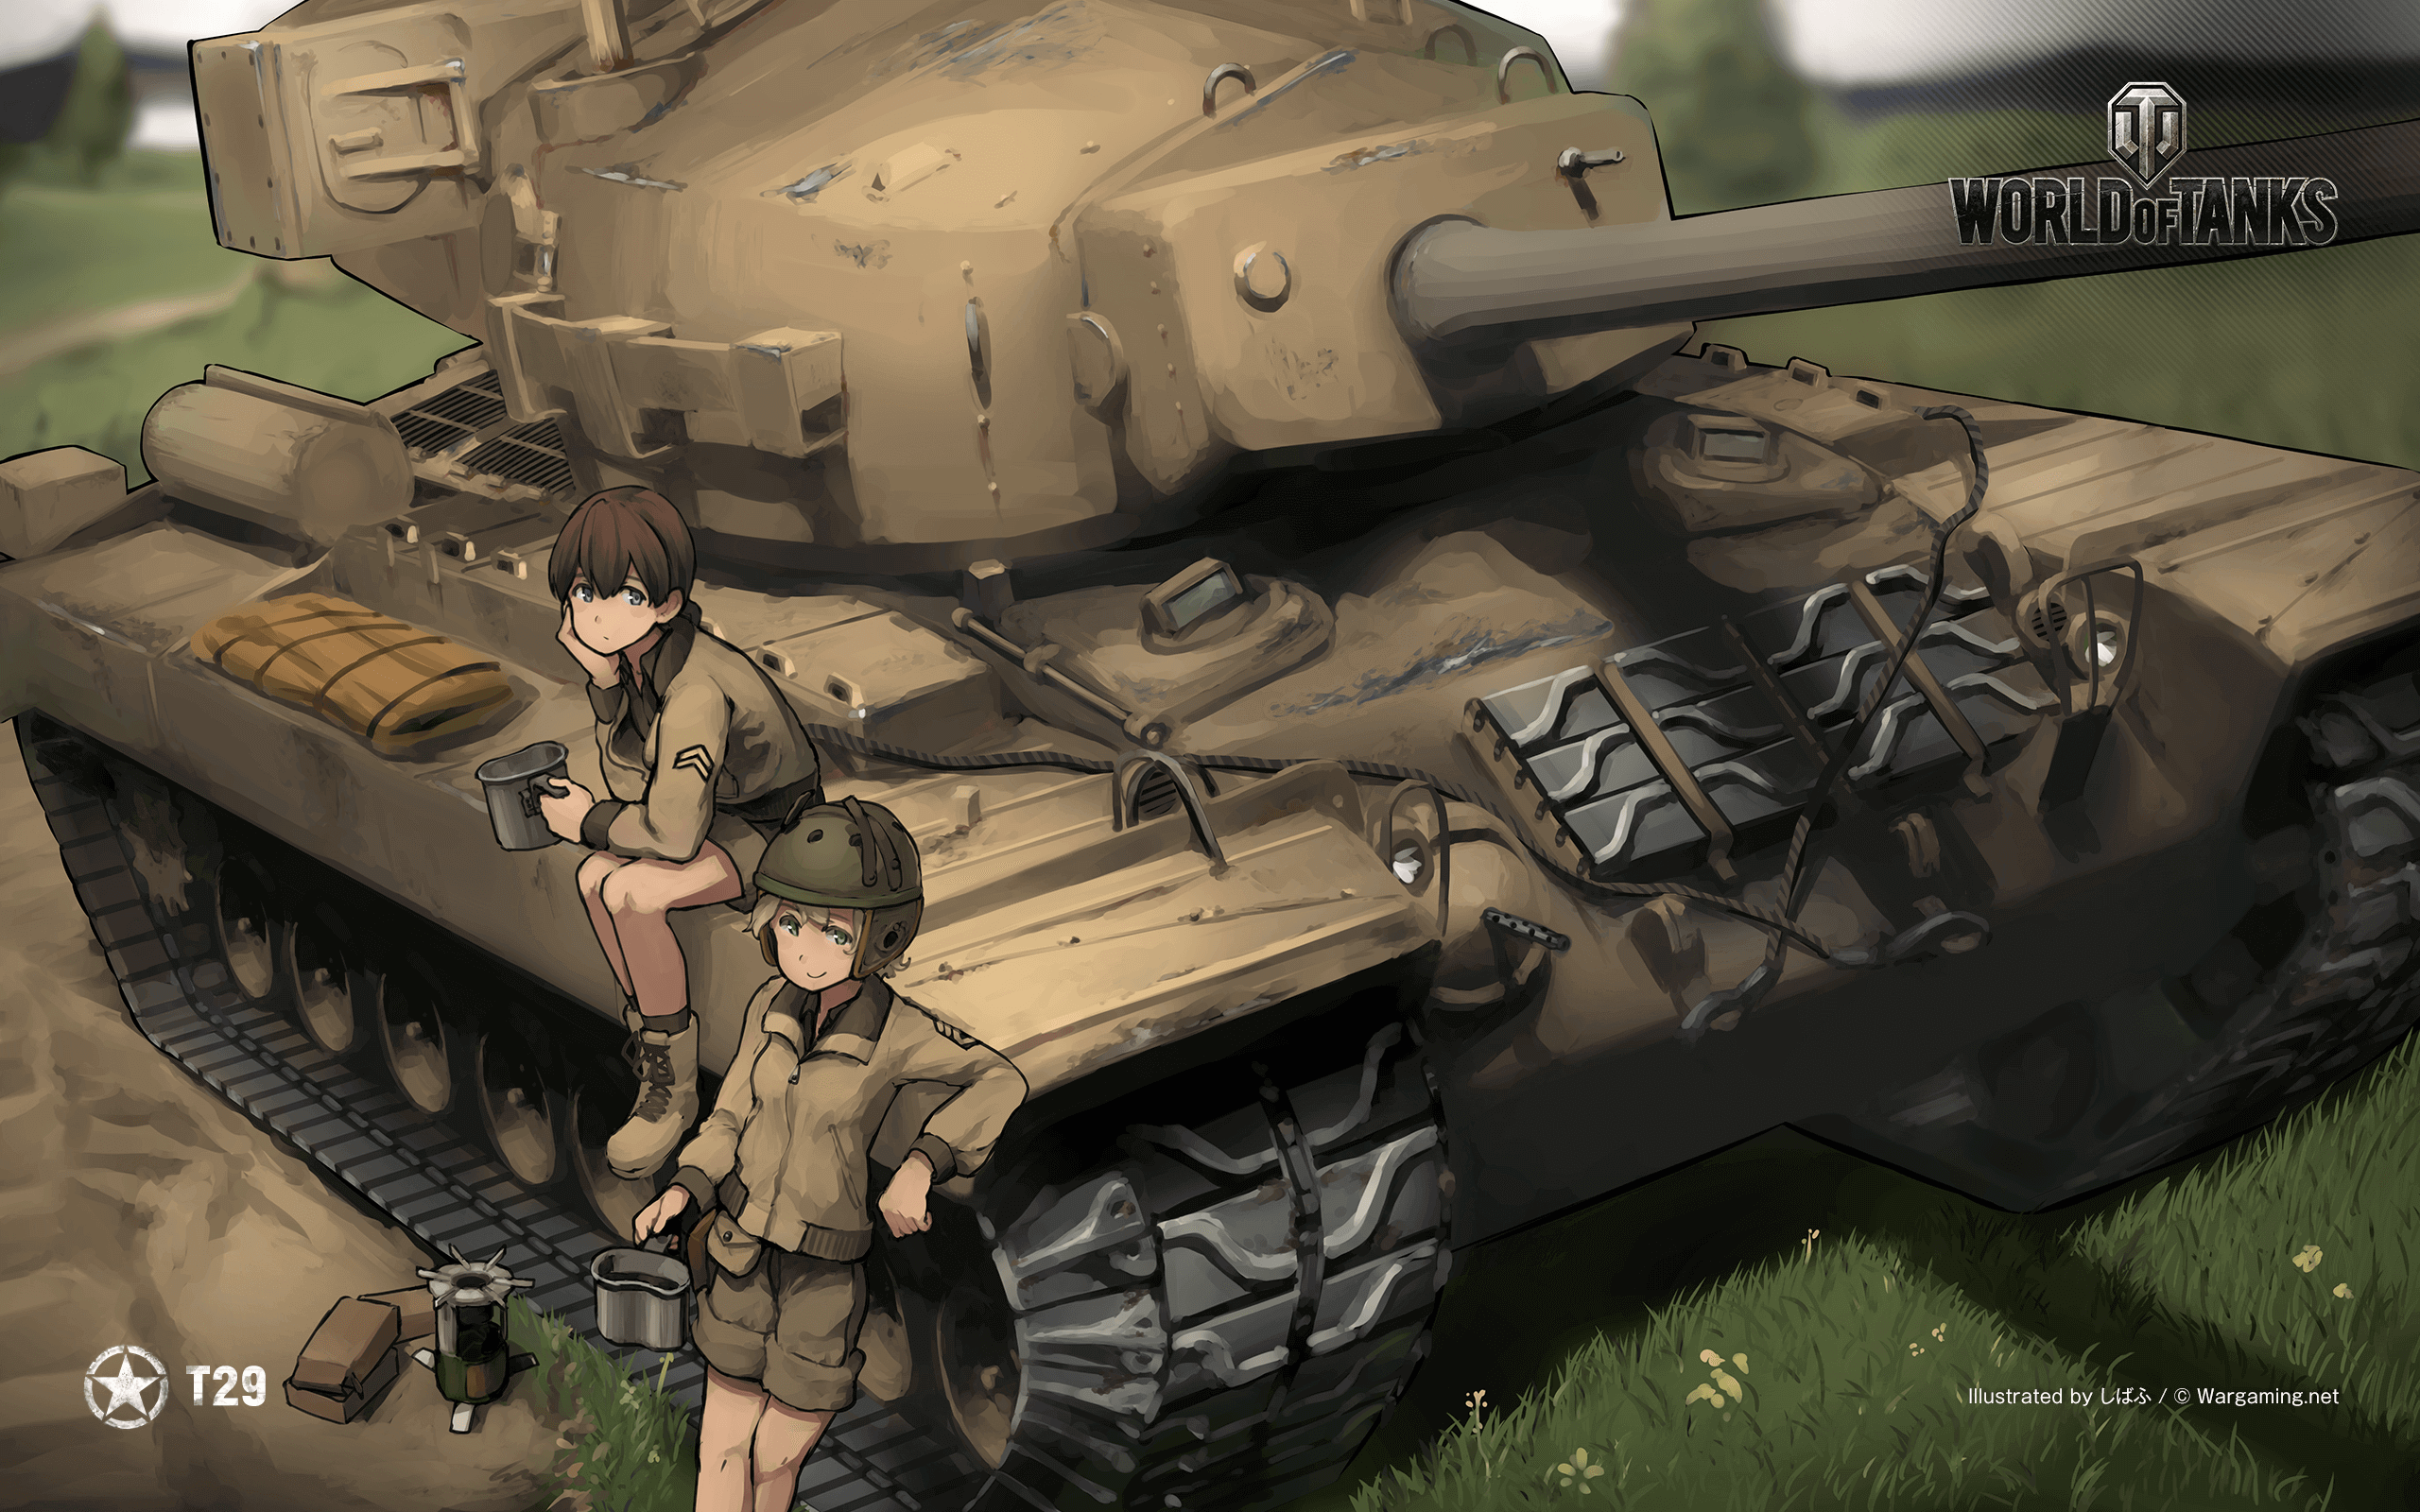 Sisterhood of Steel feat. Shibafu, T29. Tanks: World of Tanks media, best videos and artwork